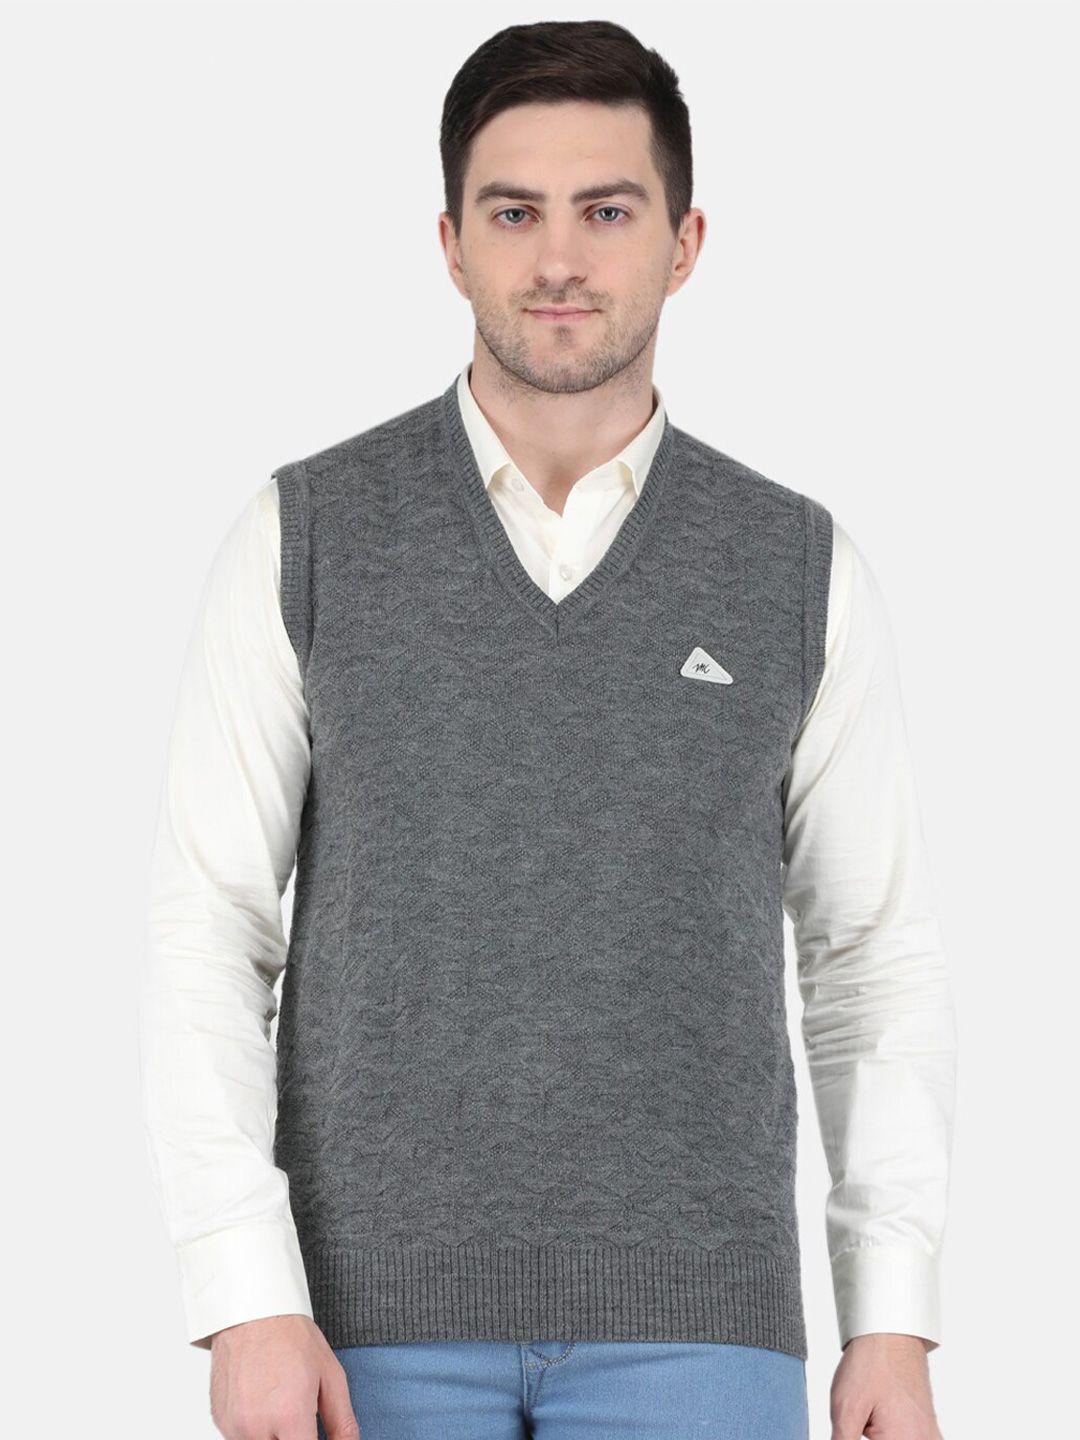 monte carlo men grey & white self design v-neck sleeveless wool sweater vest